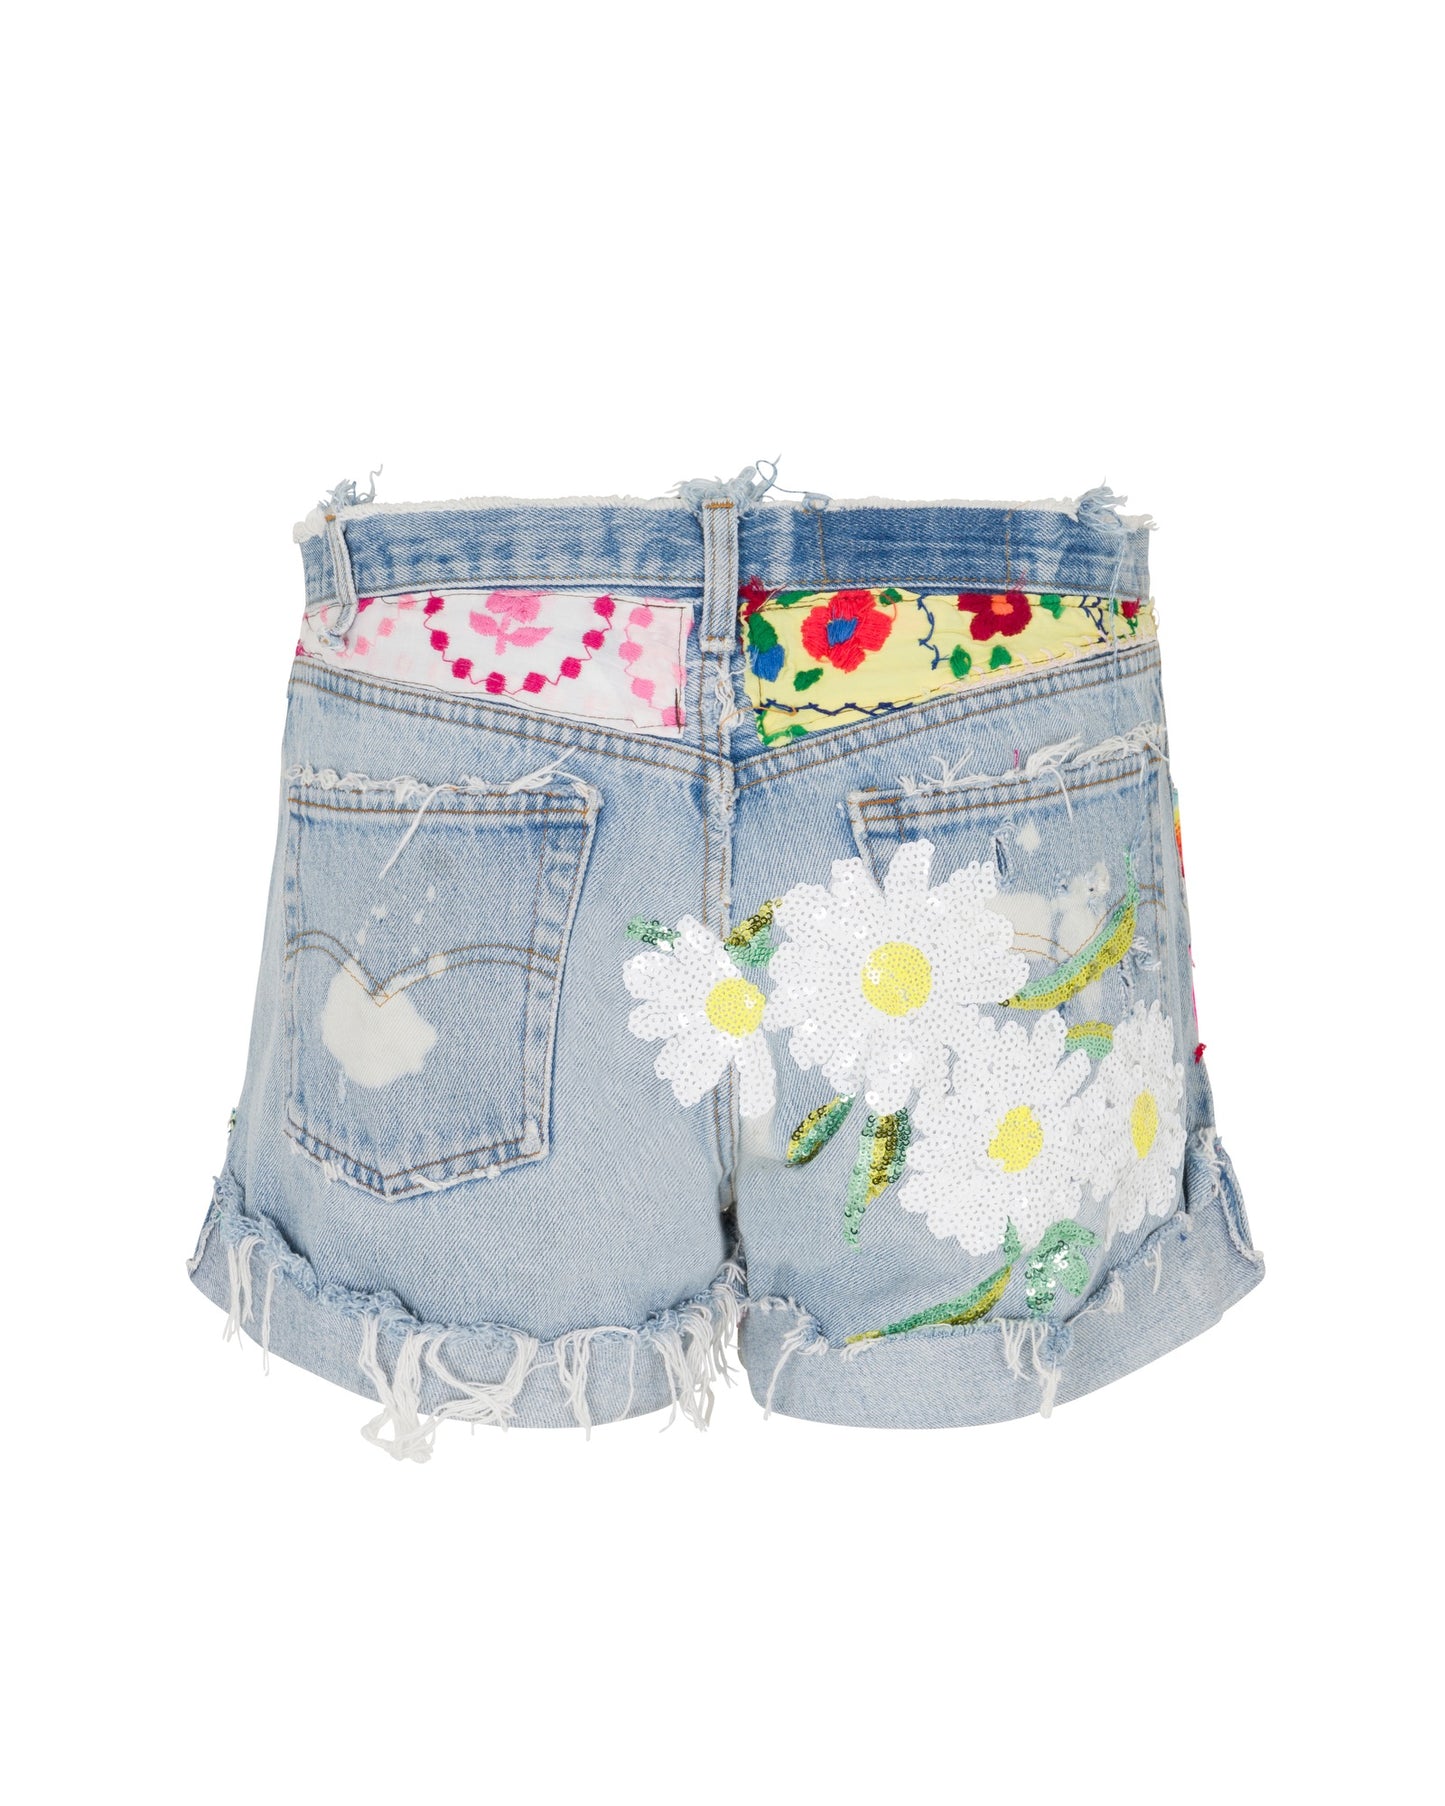 Cali Girl Denim Shorts - Garden Party Glam